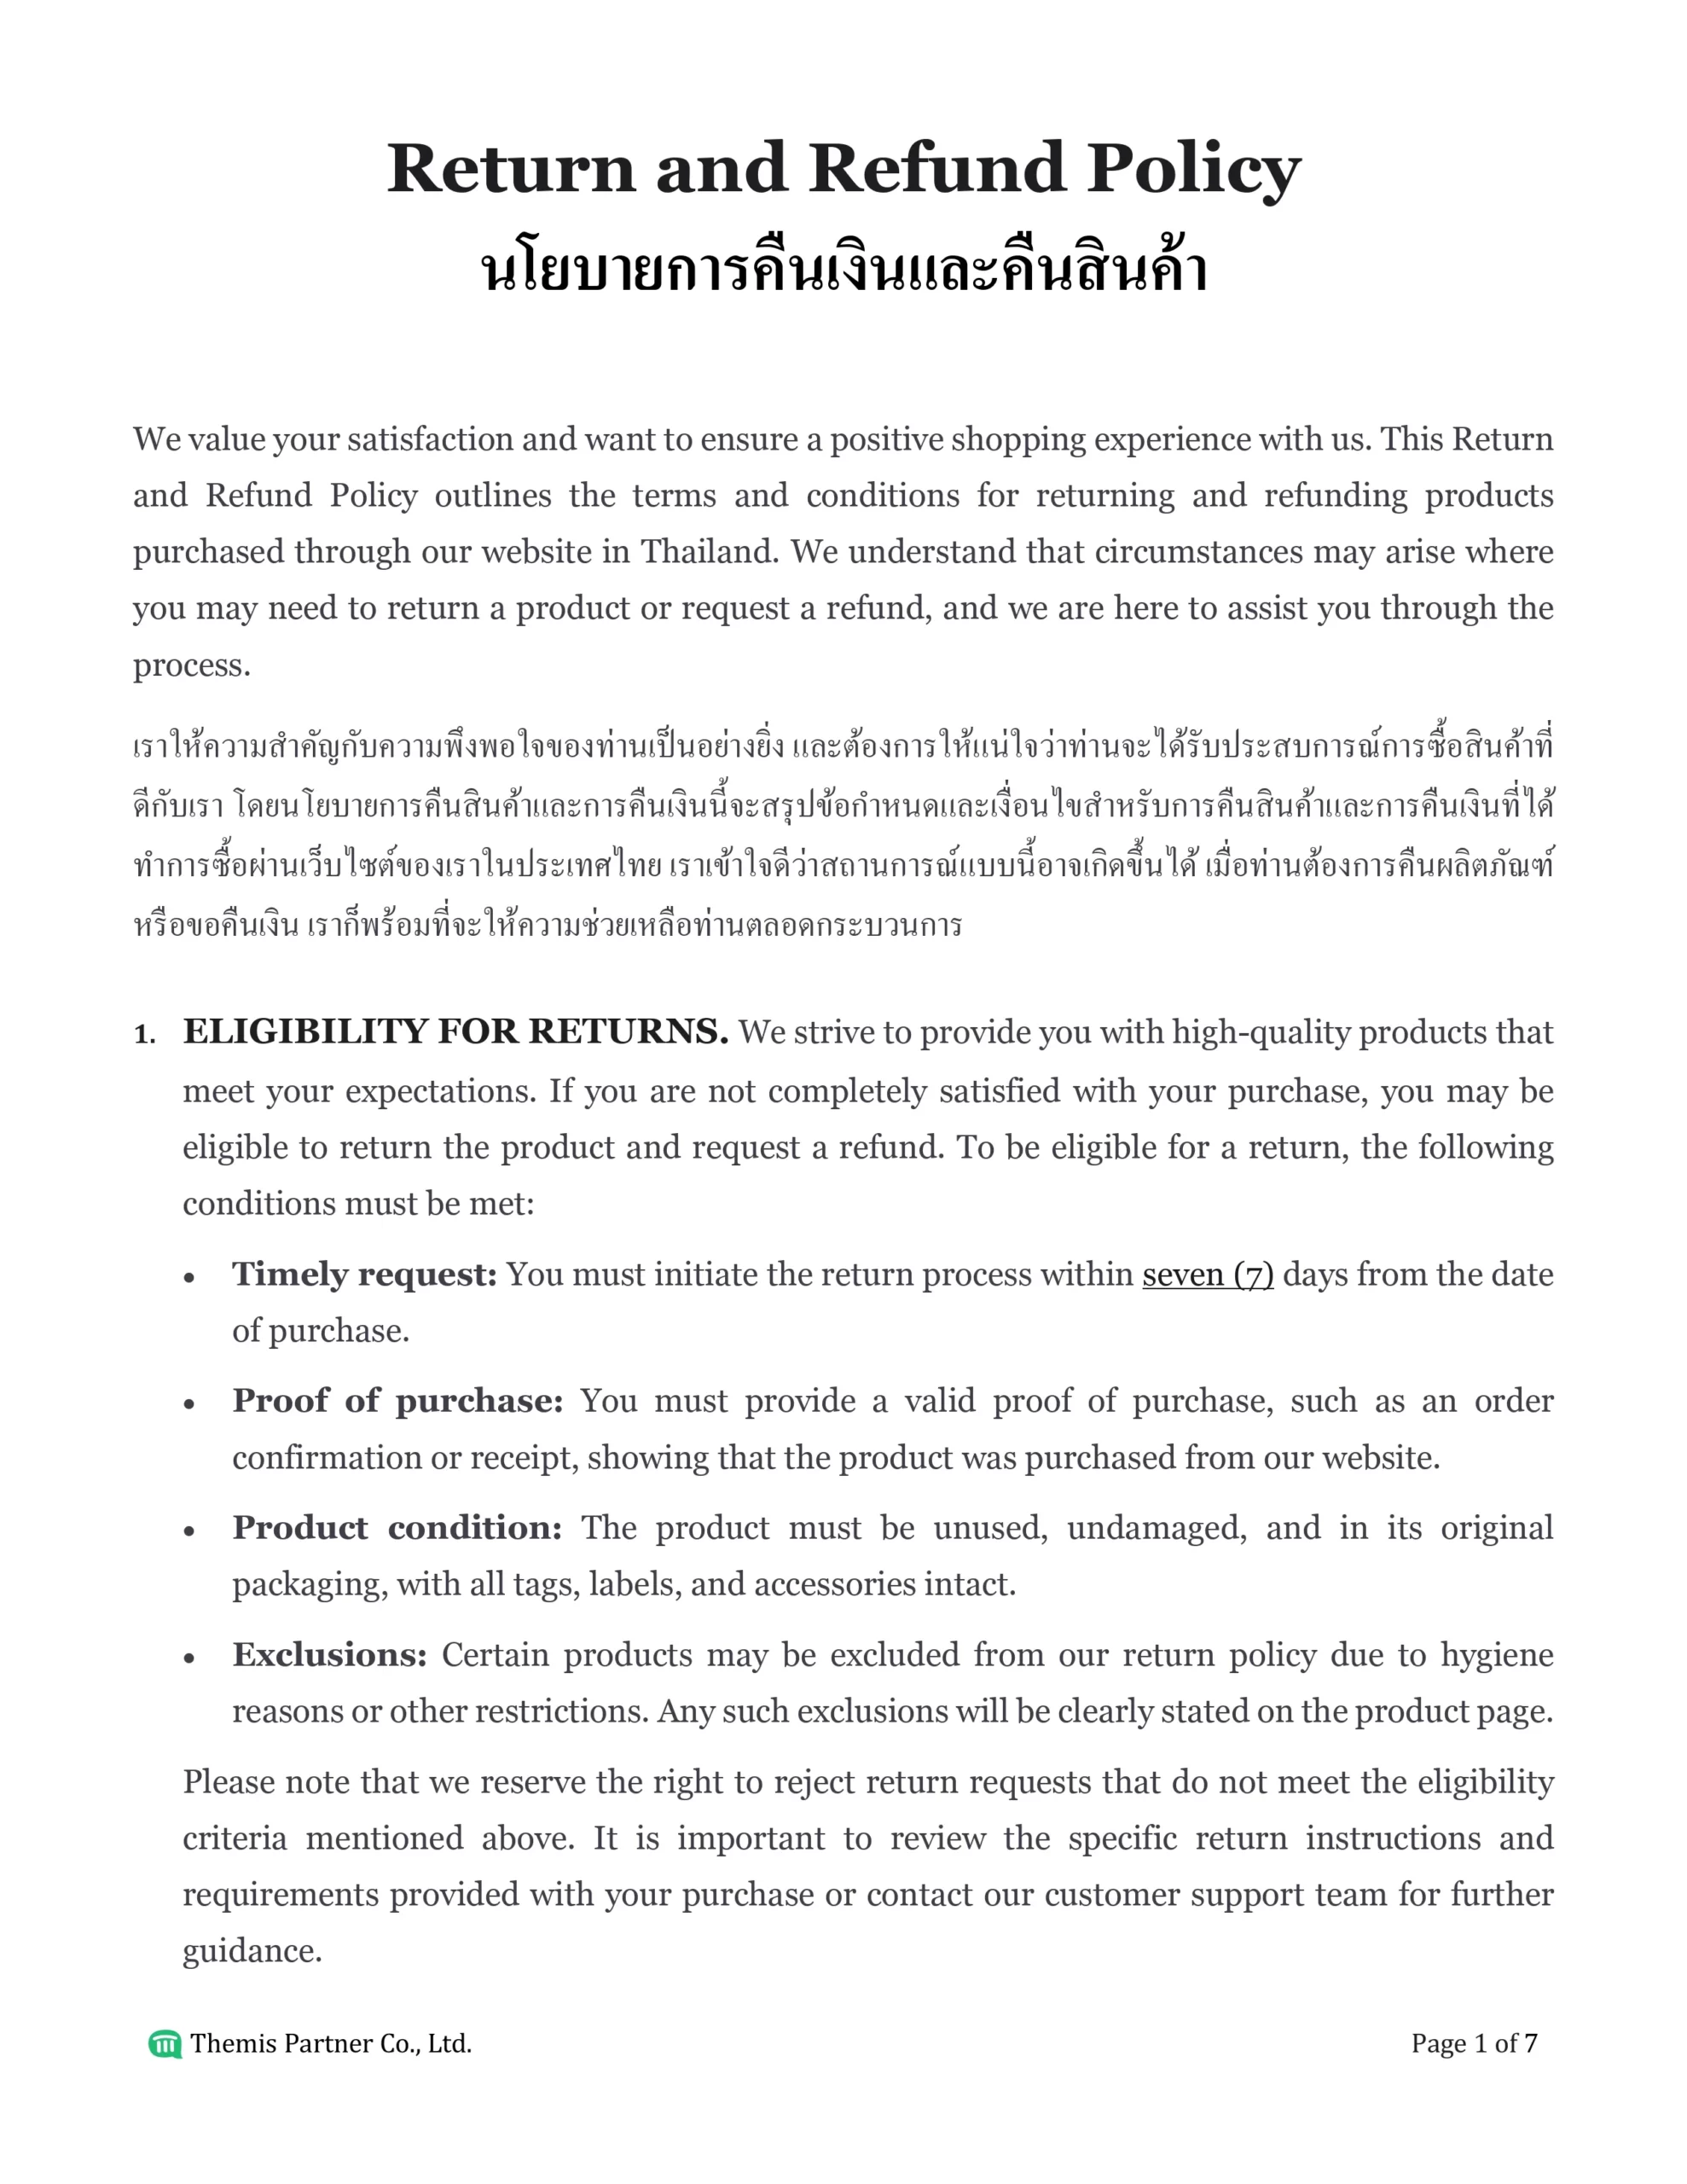 Return and refund policy Thailand 1